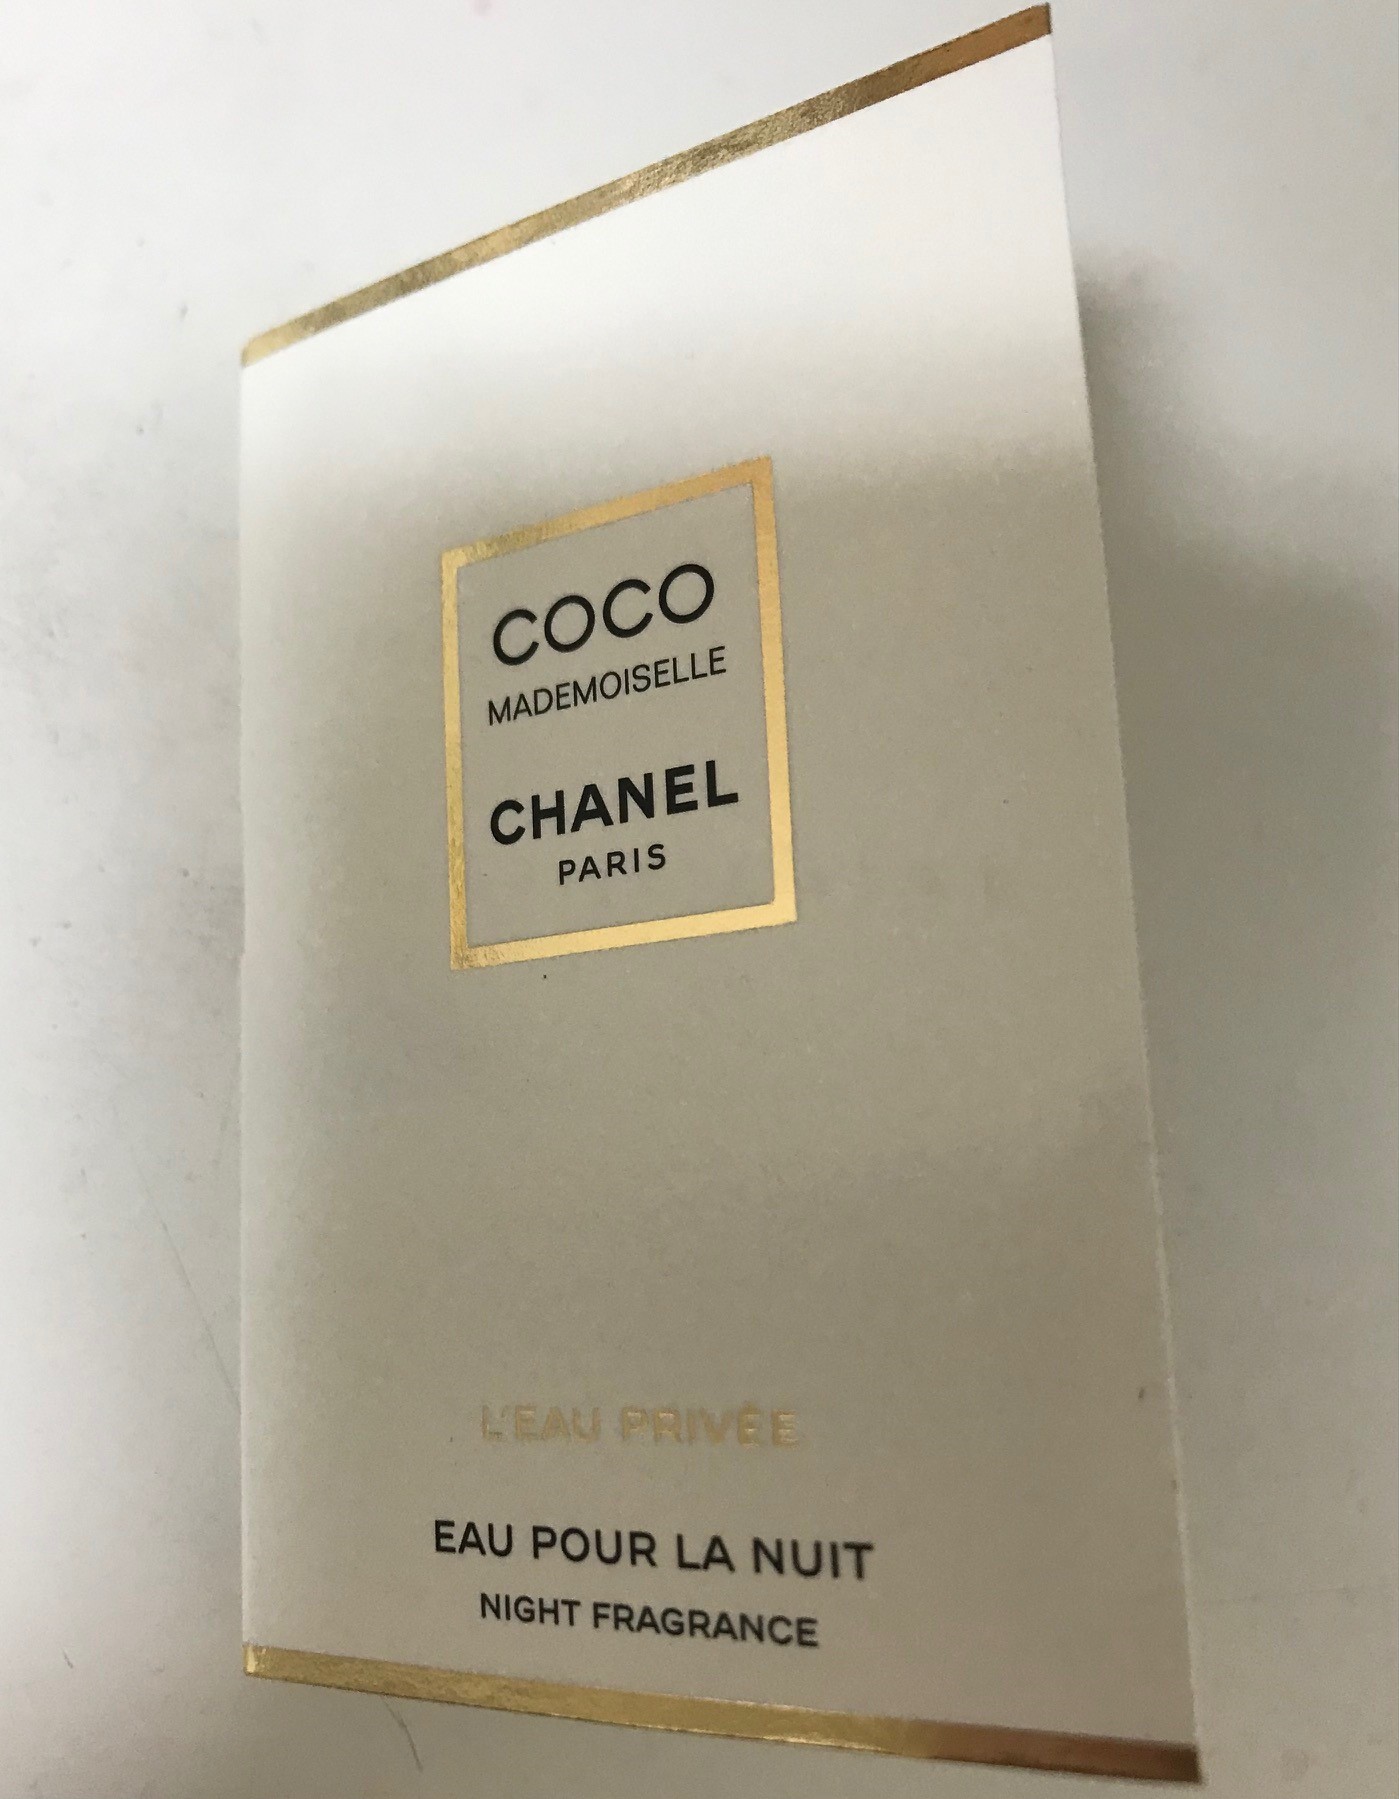 CHANEL COCO MADEMOISELLE Eau de Parfum Intense Spray - COCO MADEMOISELLE